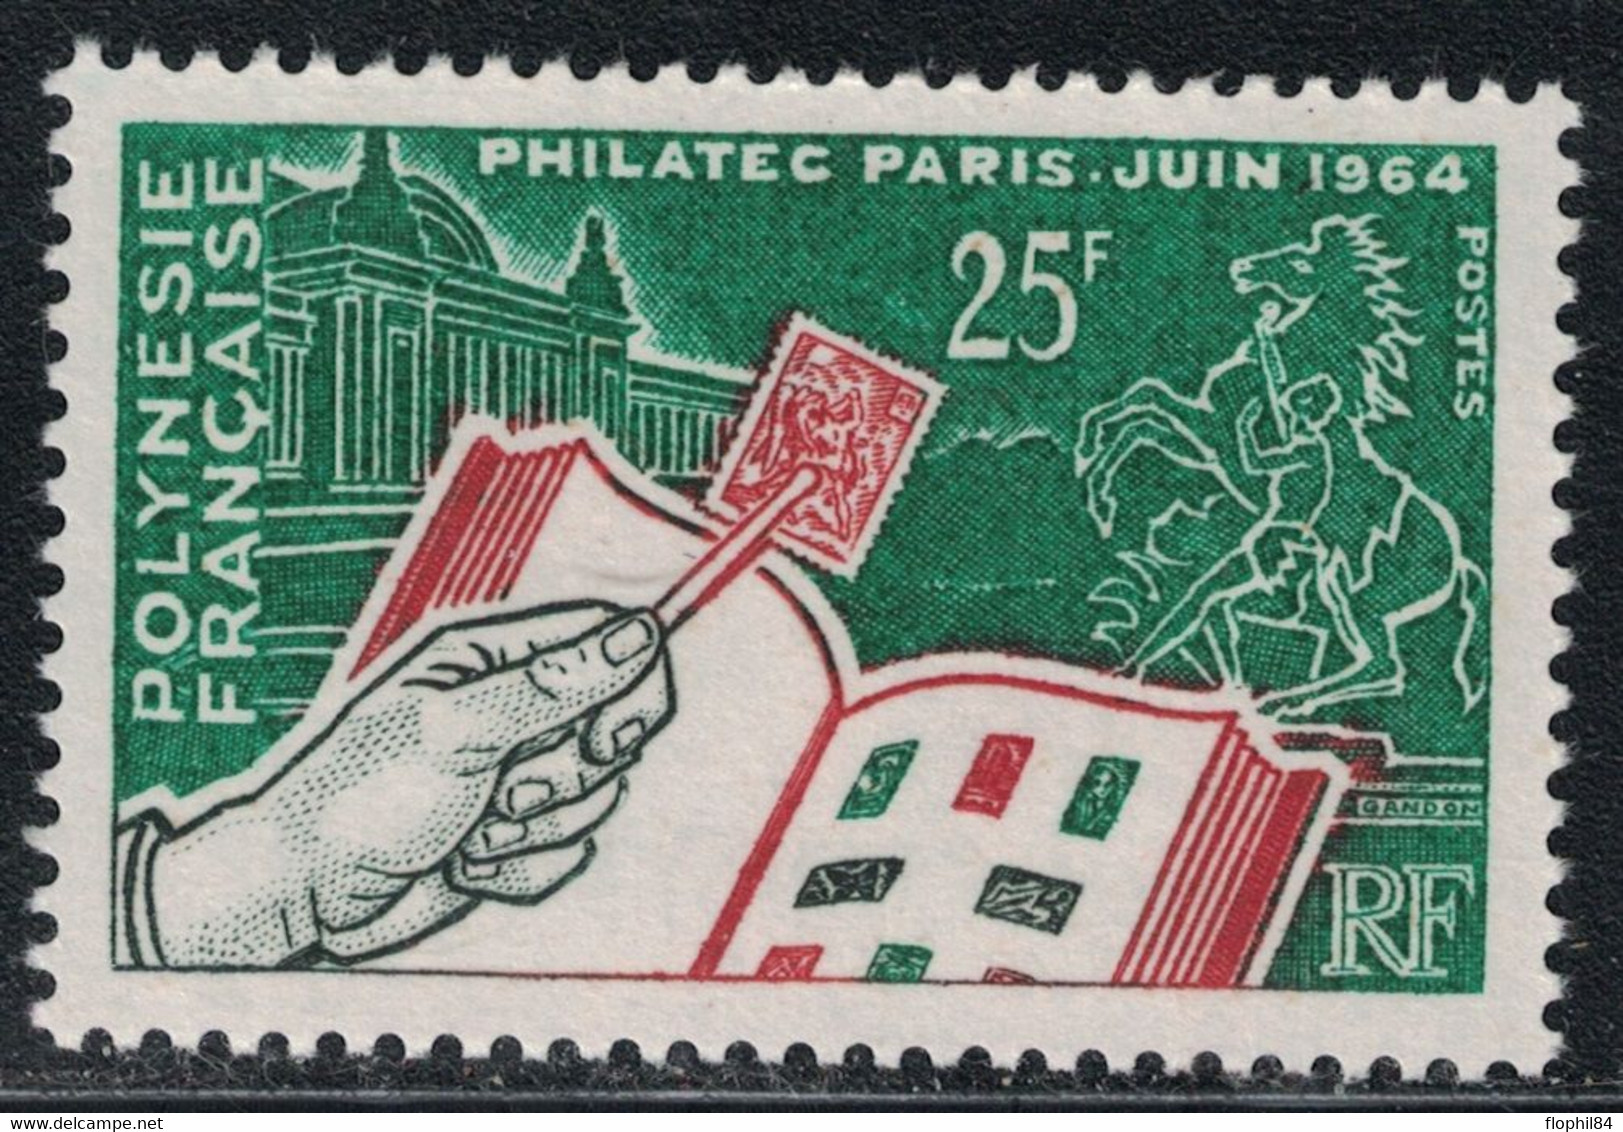 POLYNESIE FRANCAISE - N°26 - NEUF SANS TRACE DE CHARNIERE - COTE 18€60 - YT 2015. - Unused Stamps